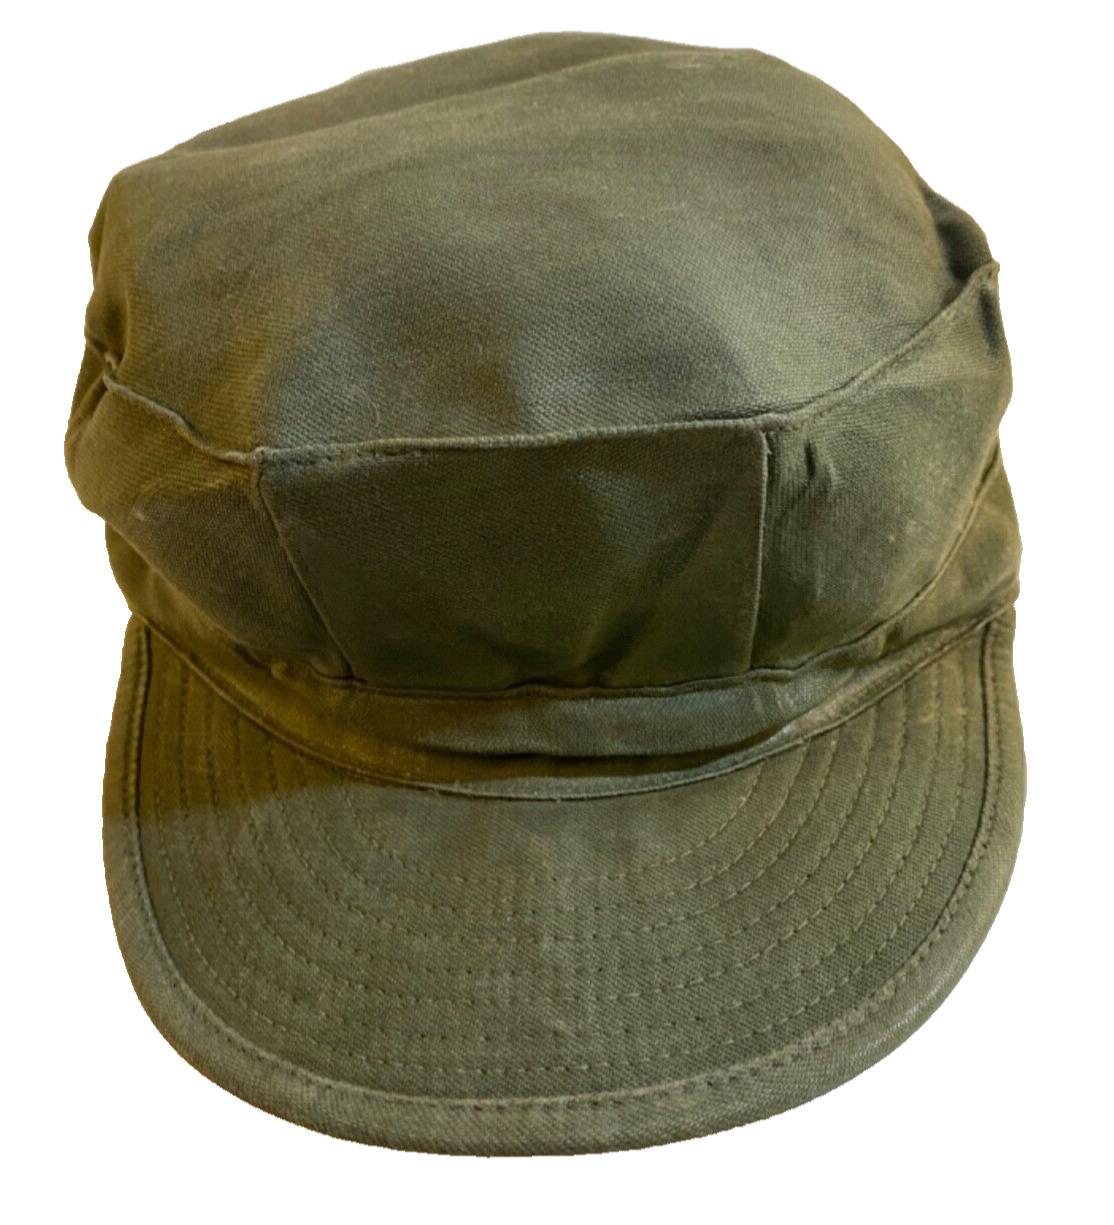 Vietnam War era USMC EGA OD green utility cap, used, named, size not marked